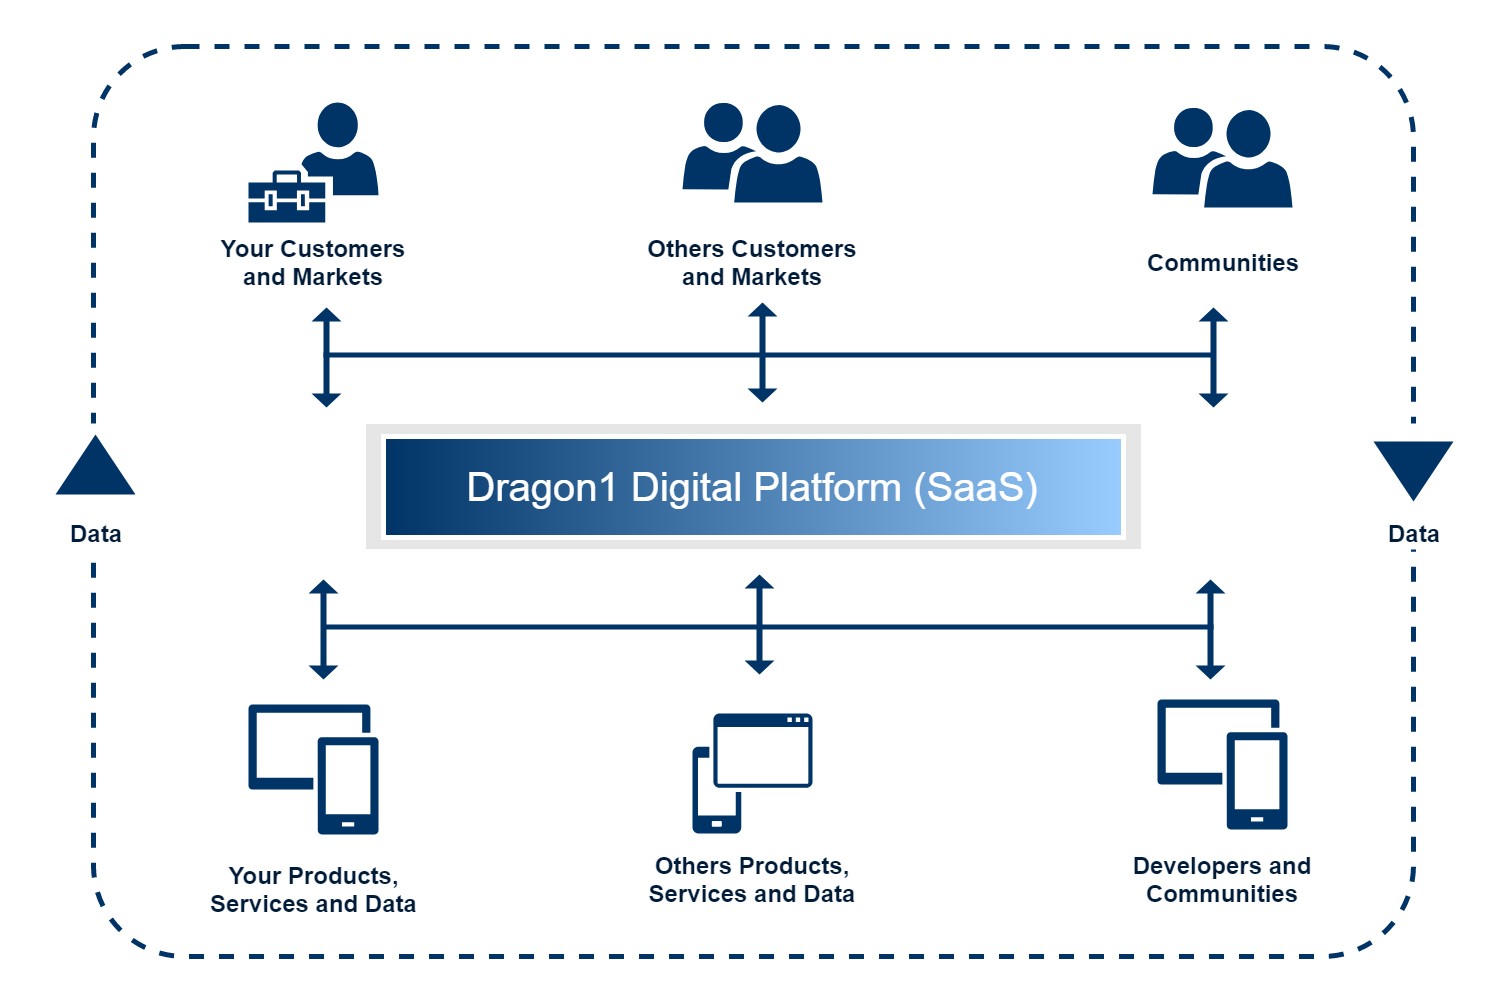 Value Stream Definition - Dragon1